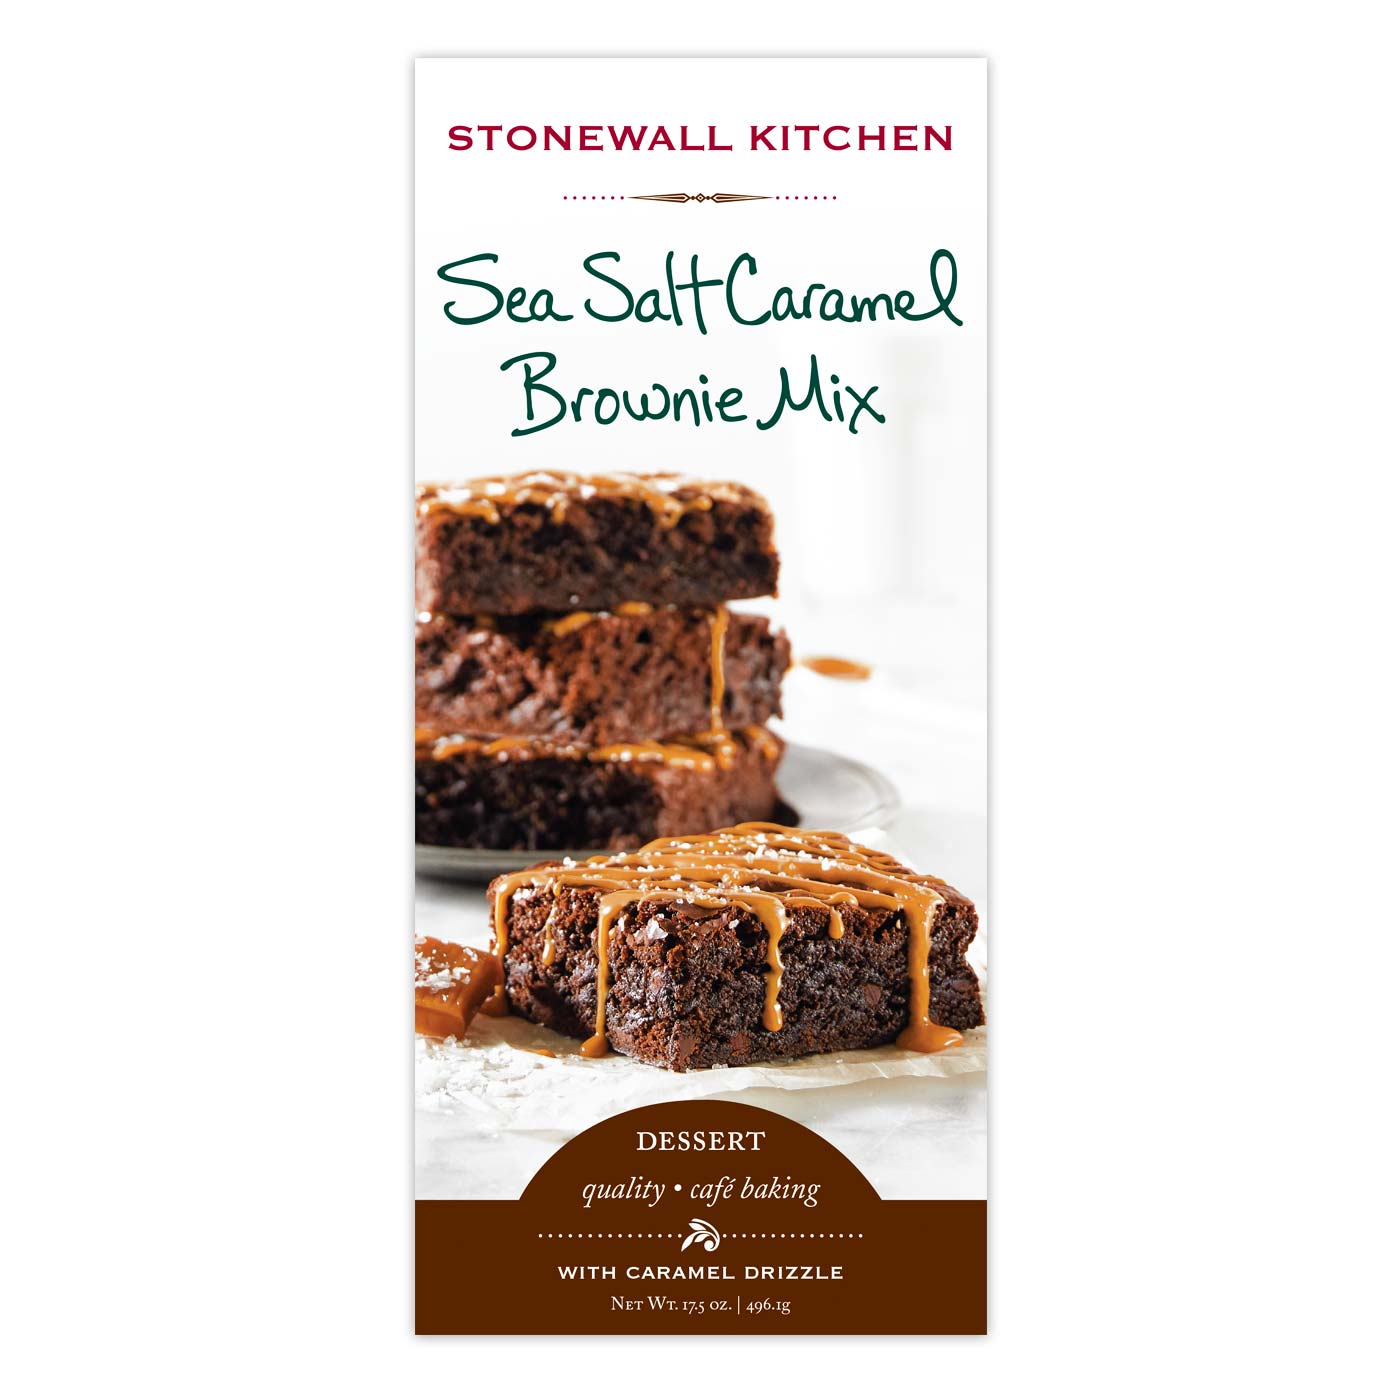 Stonewall Kitchen Sea Salt Caramel Brownie Mix - Olive Oil Etcetera 